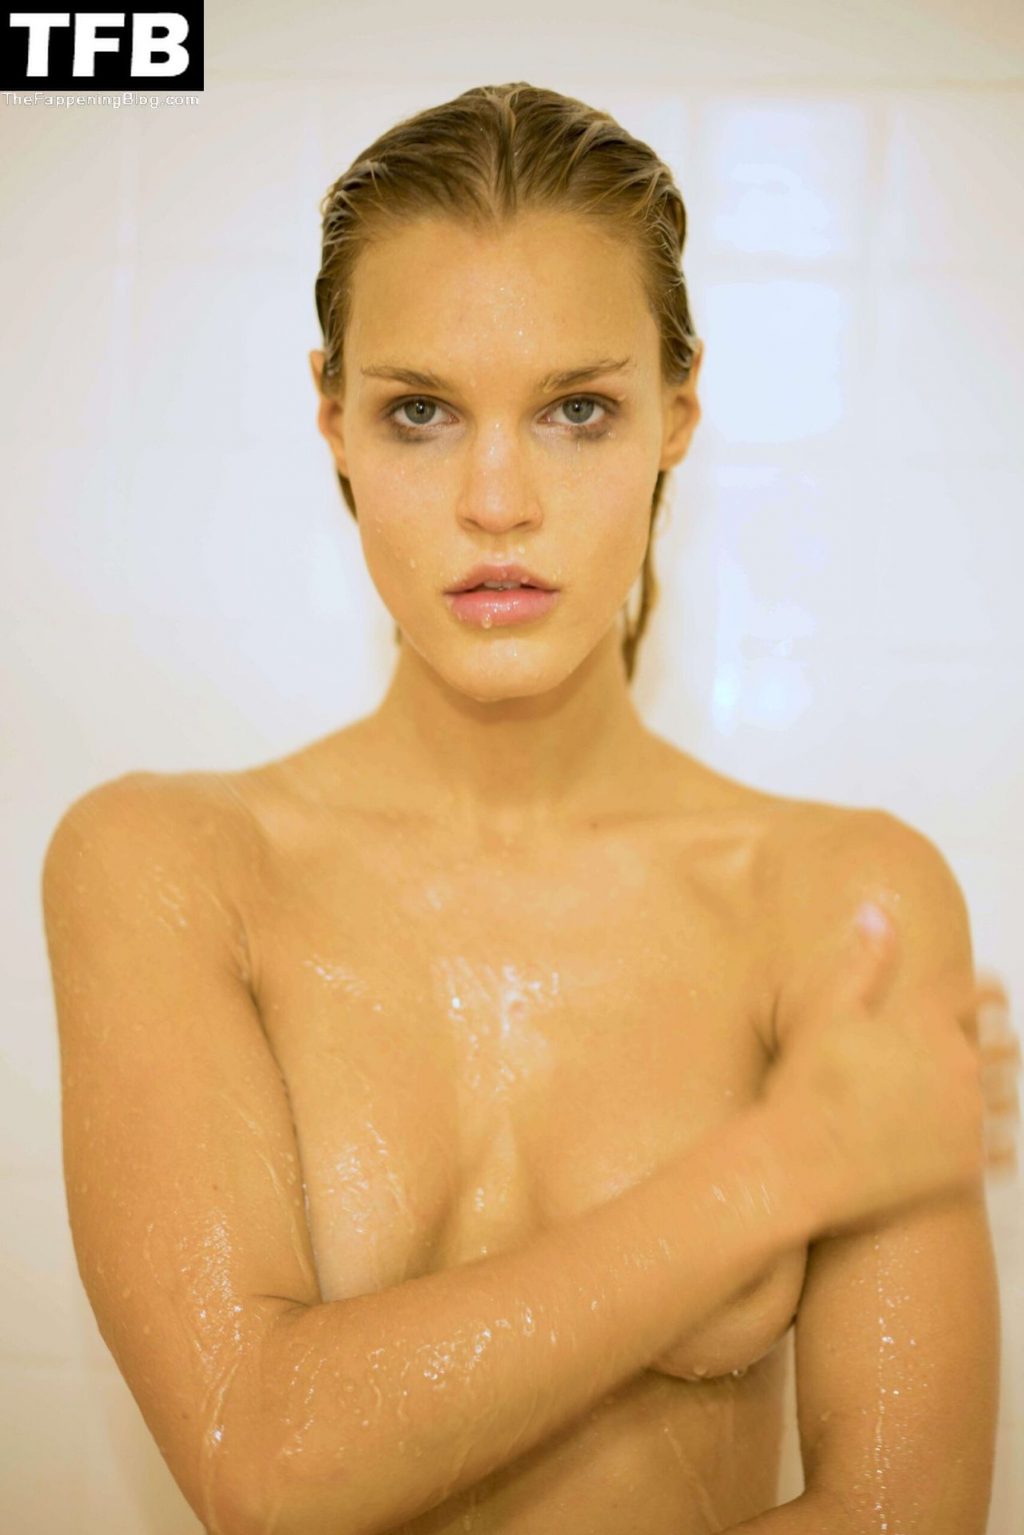 Joy Corrigan Displays Her Fantastic Body in a Full Frontal Nude Shoot by Kesler Tran (38 Photos)